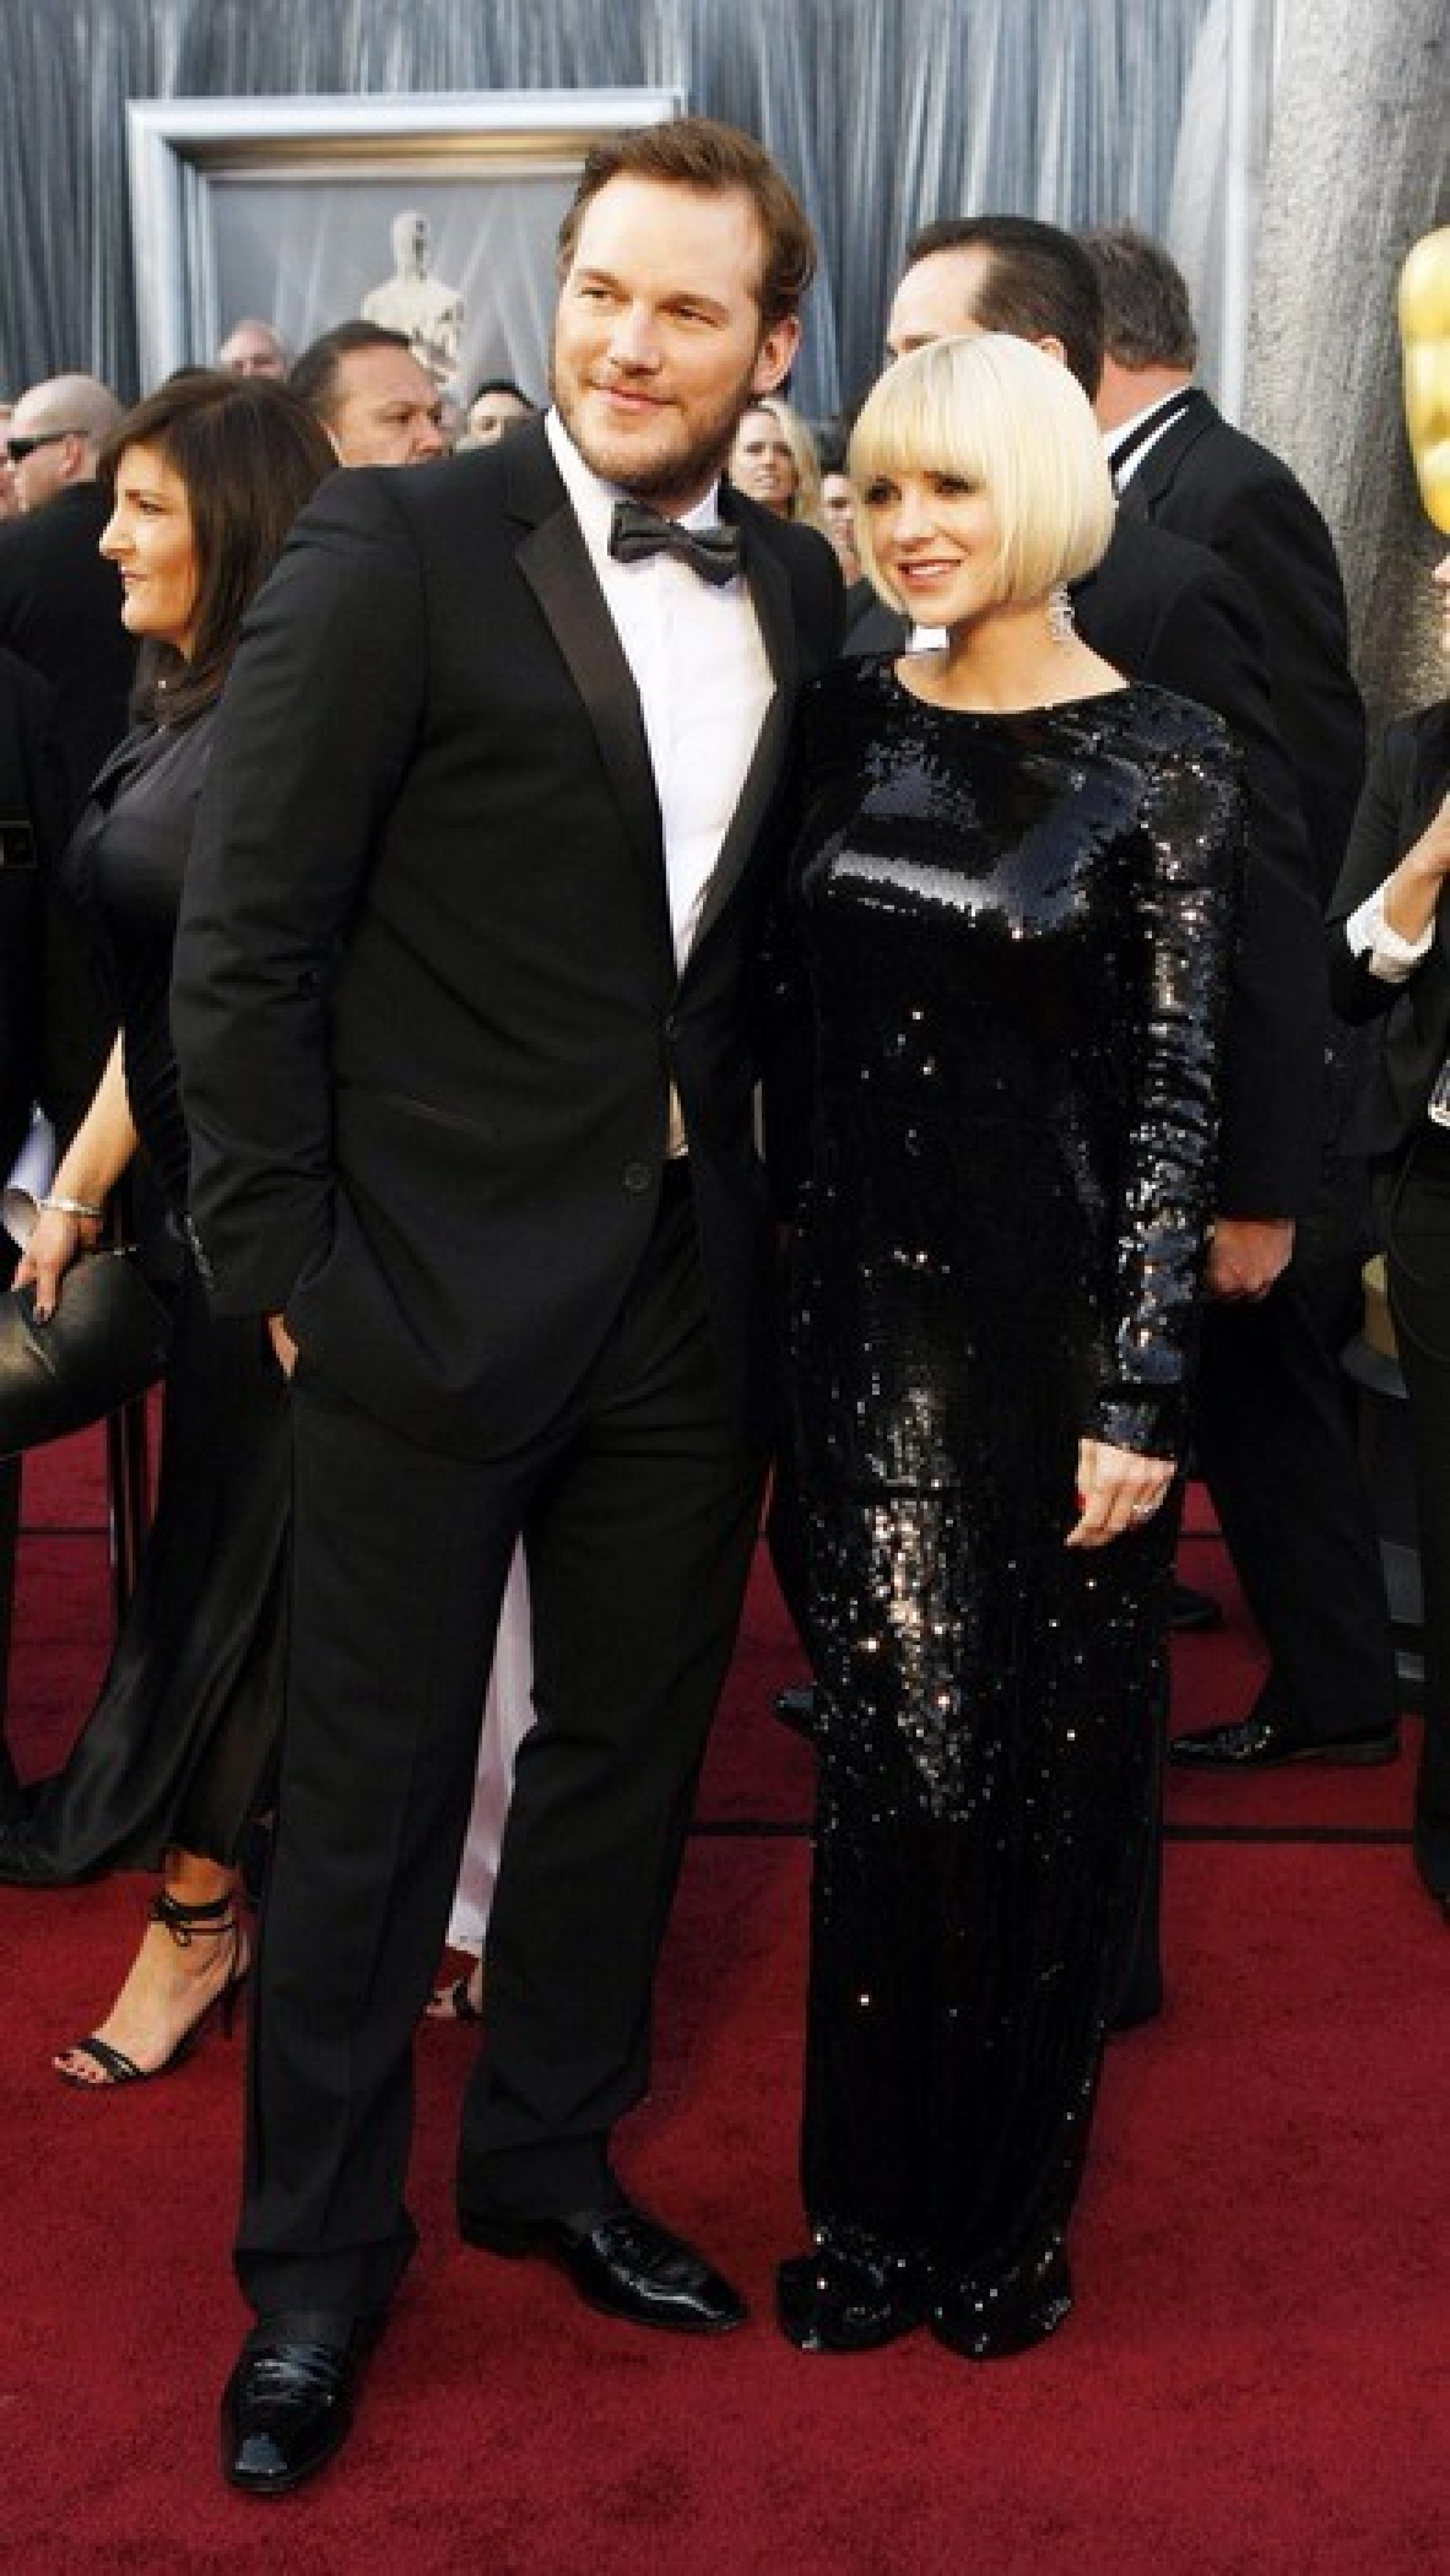 Chris Pratt and Anna Faris arrive at the 84th Academy Awards.